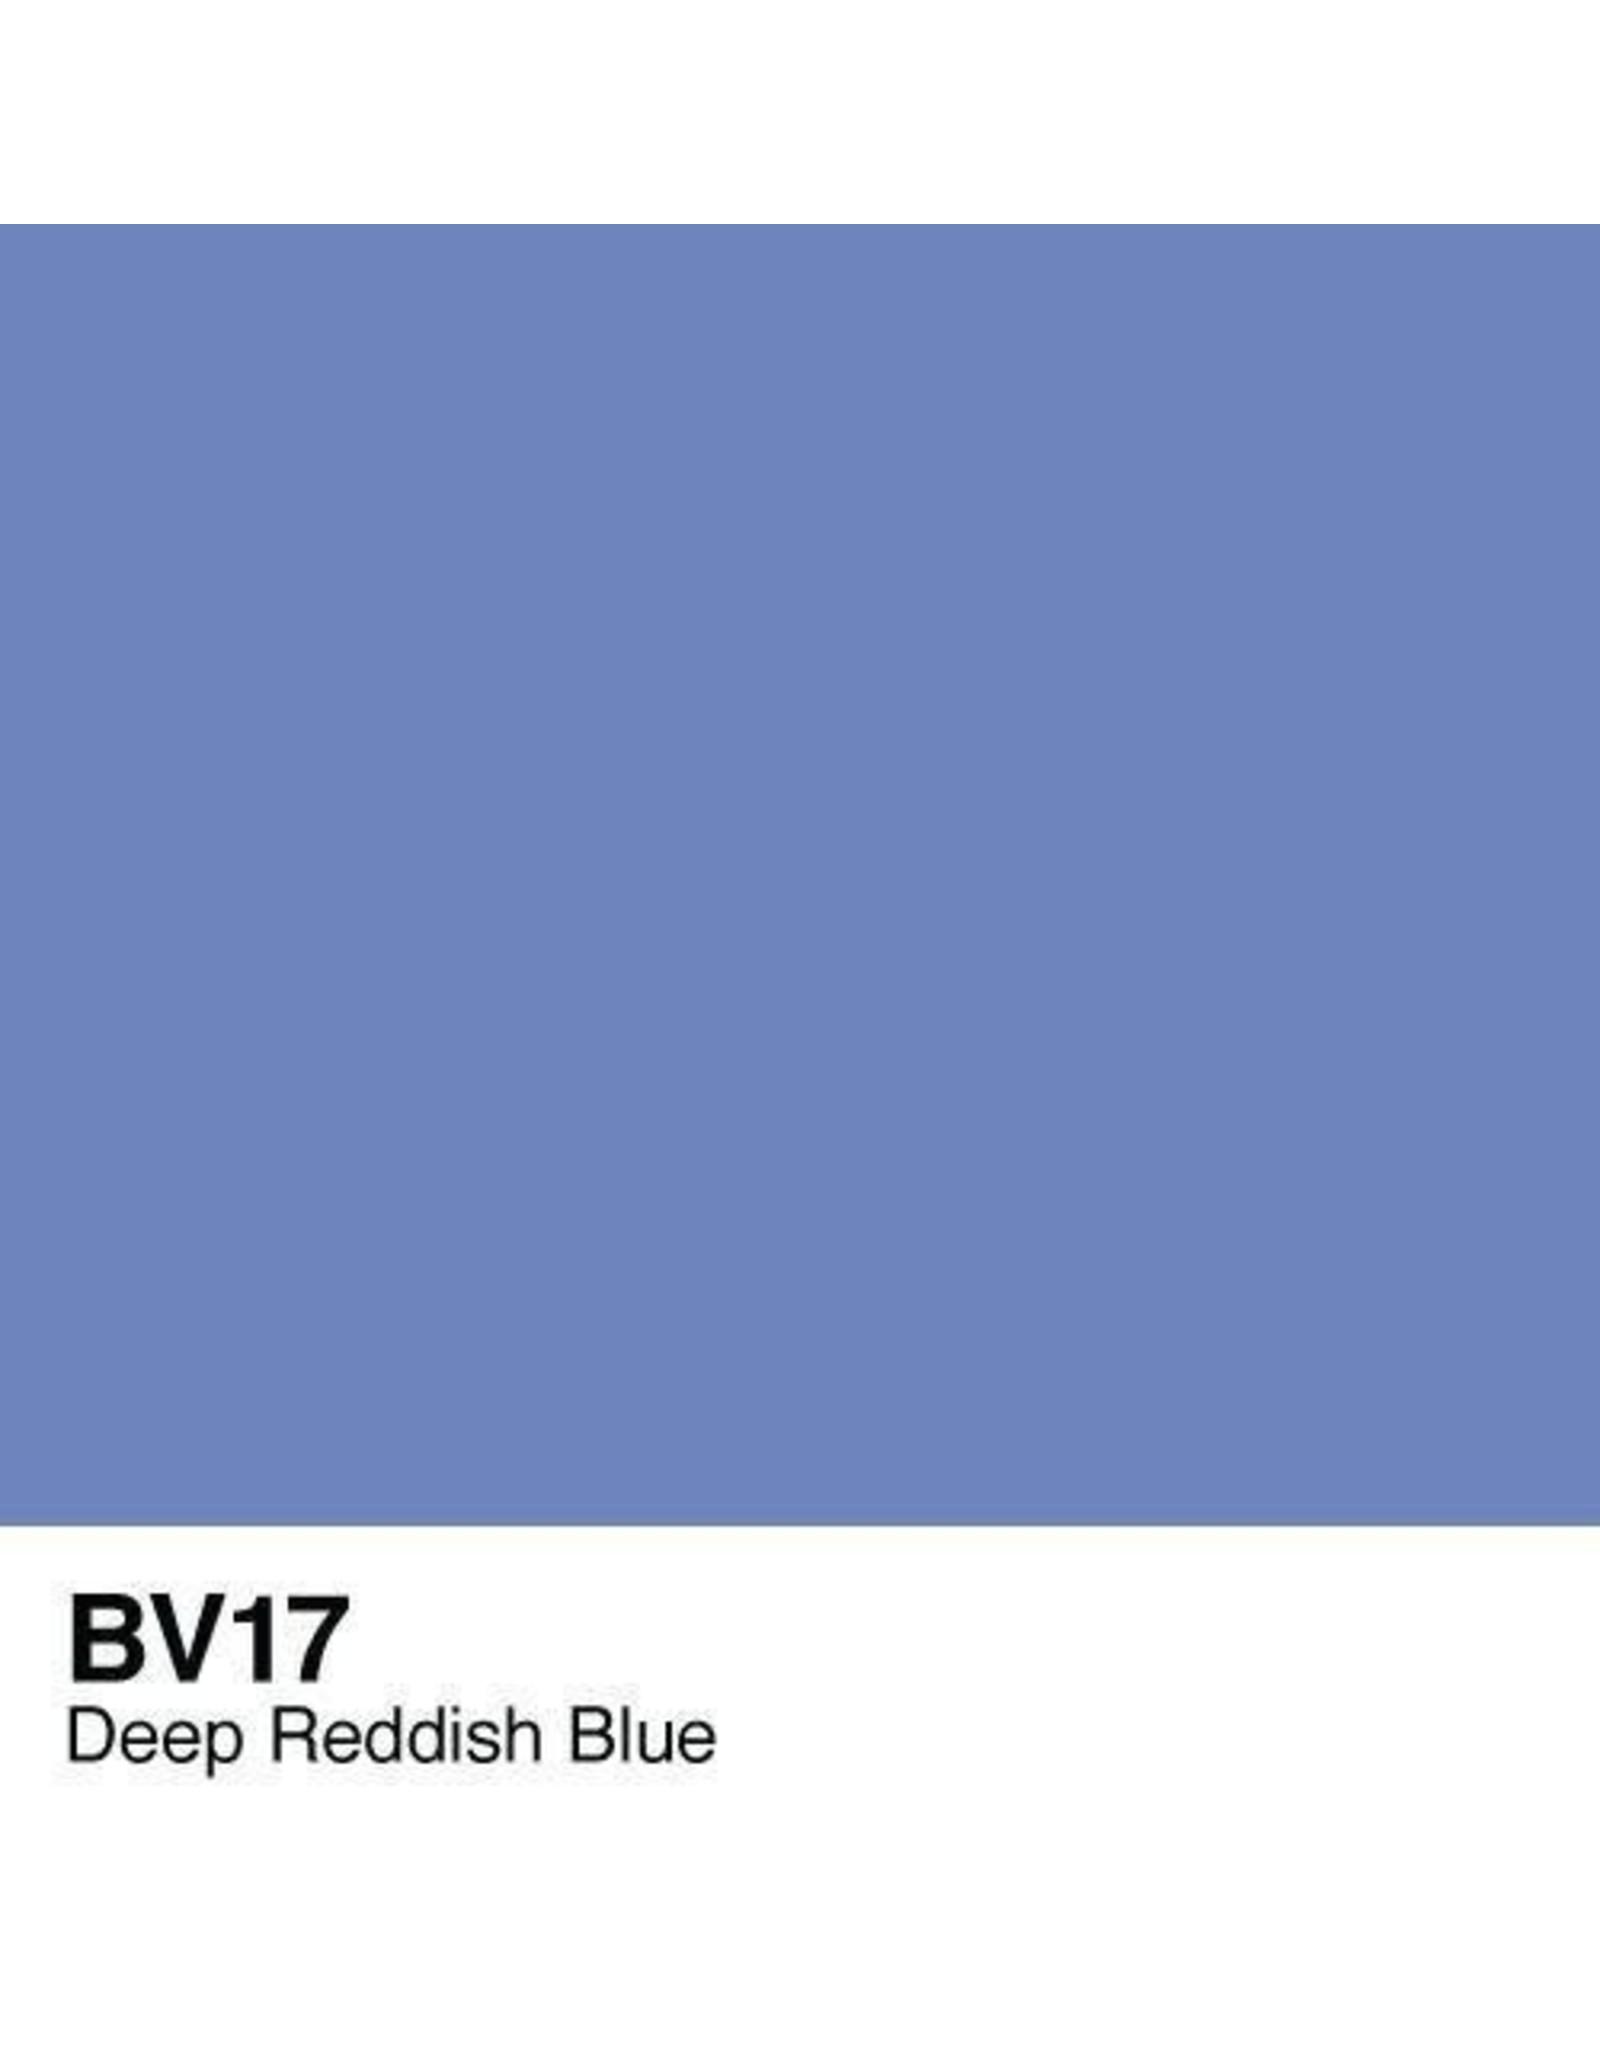 COPIC COPIC BV17 DEEP REDDISH BLUE SKETCH MARKER